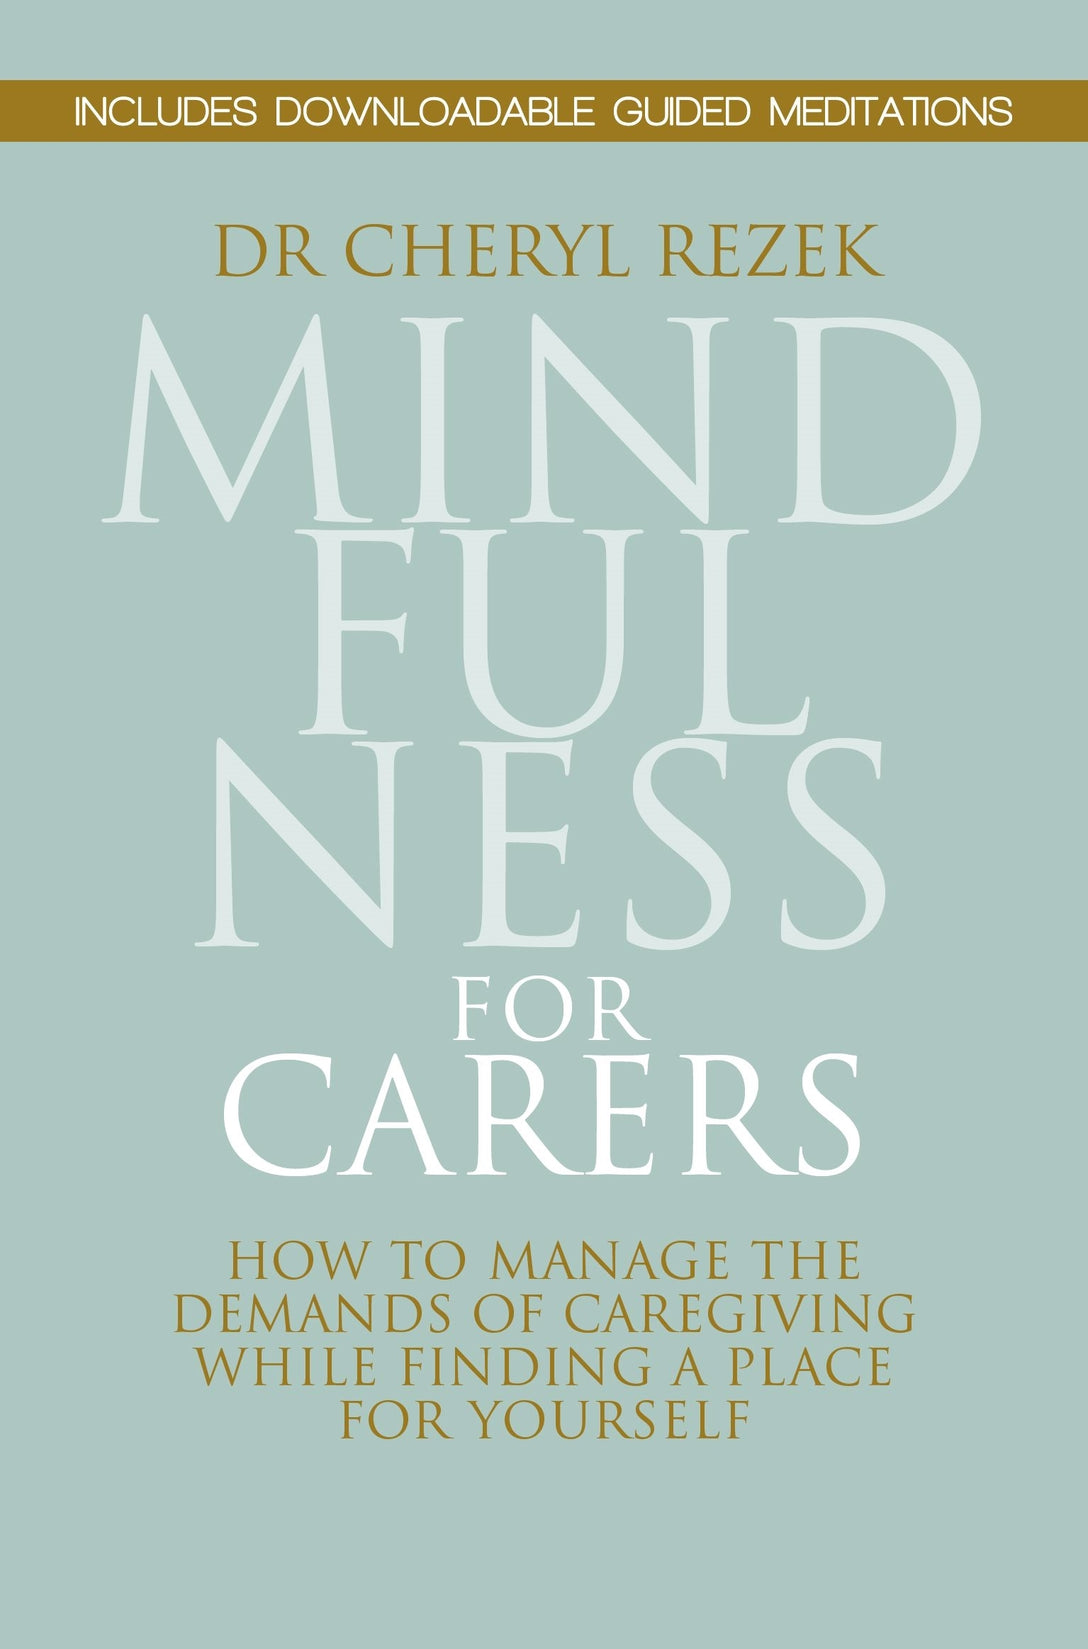 Mindfulness for Carers by Cheryl Rezek